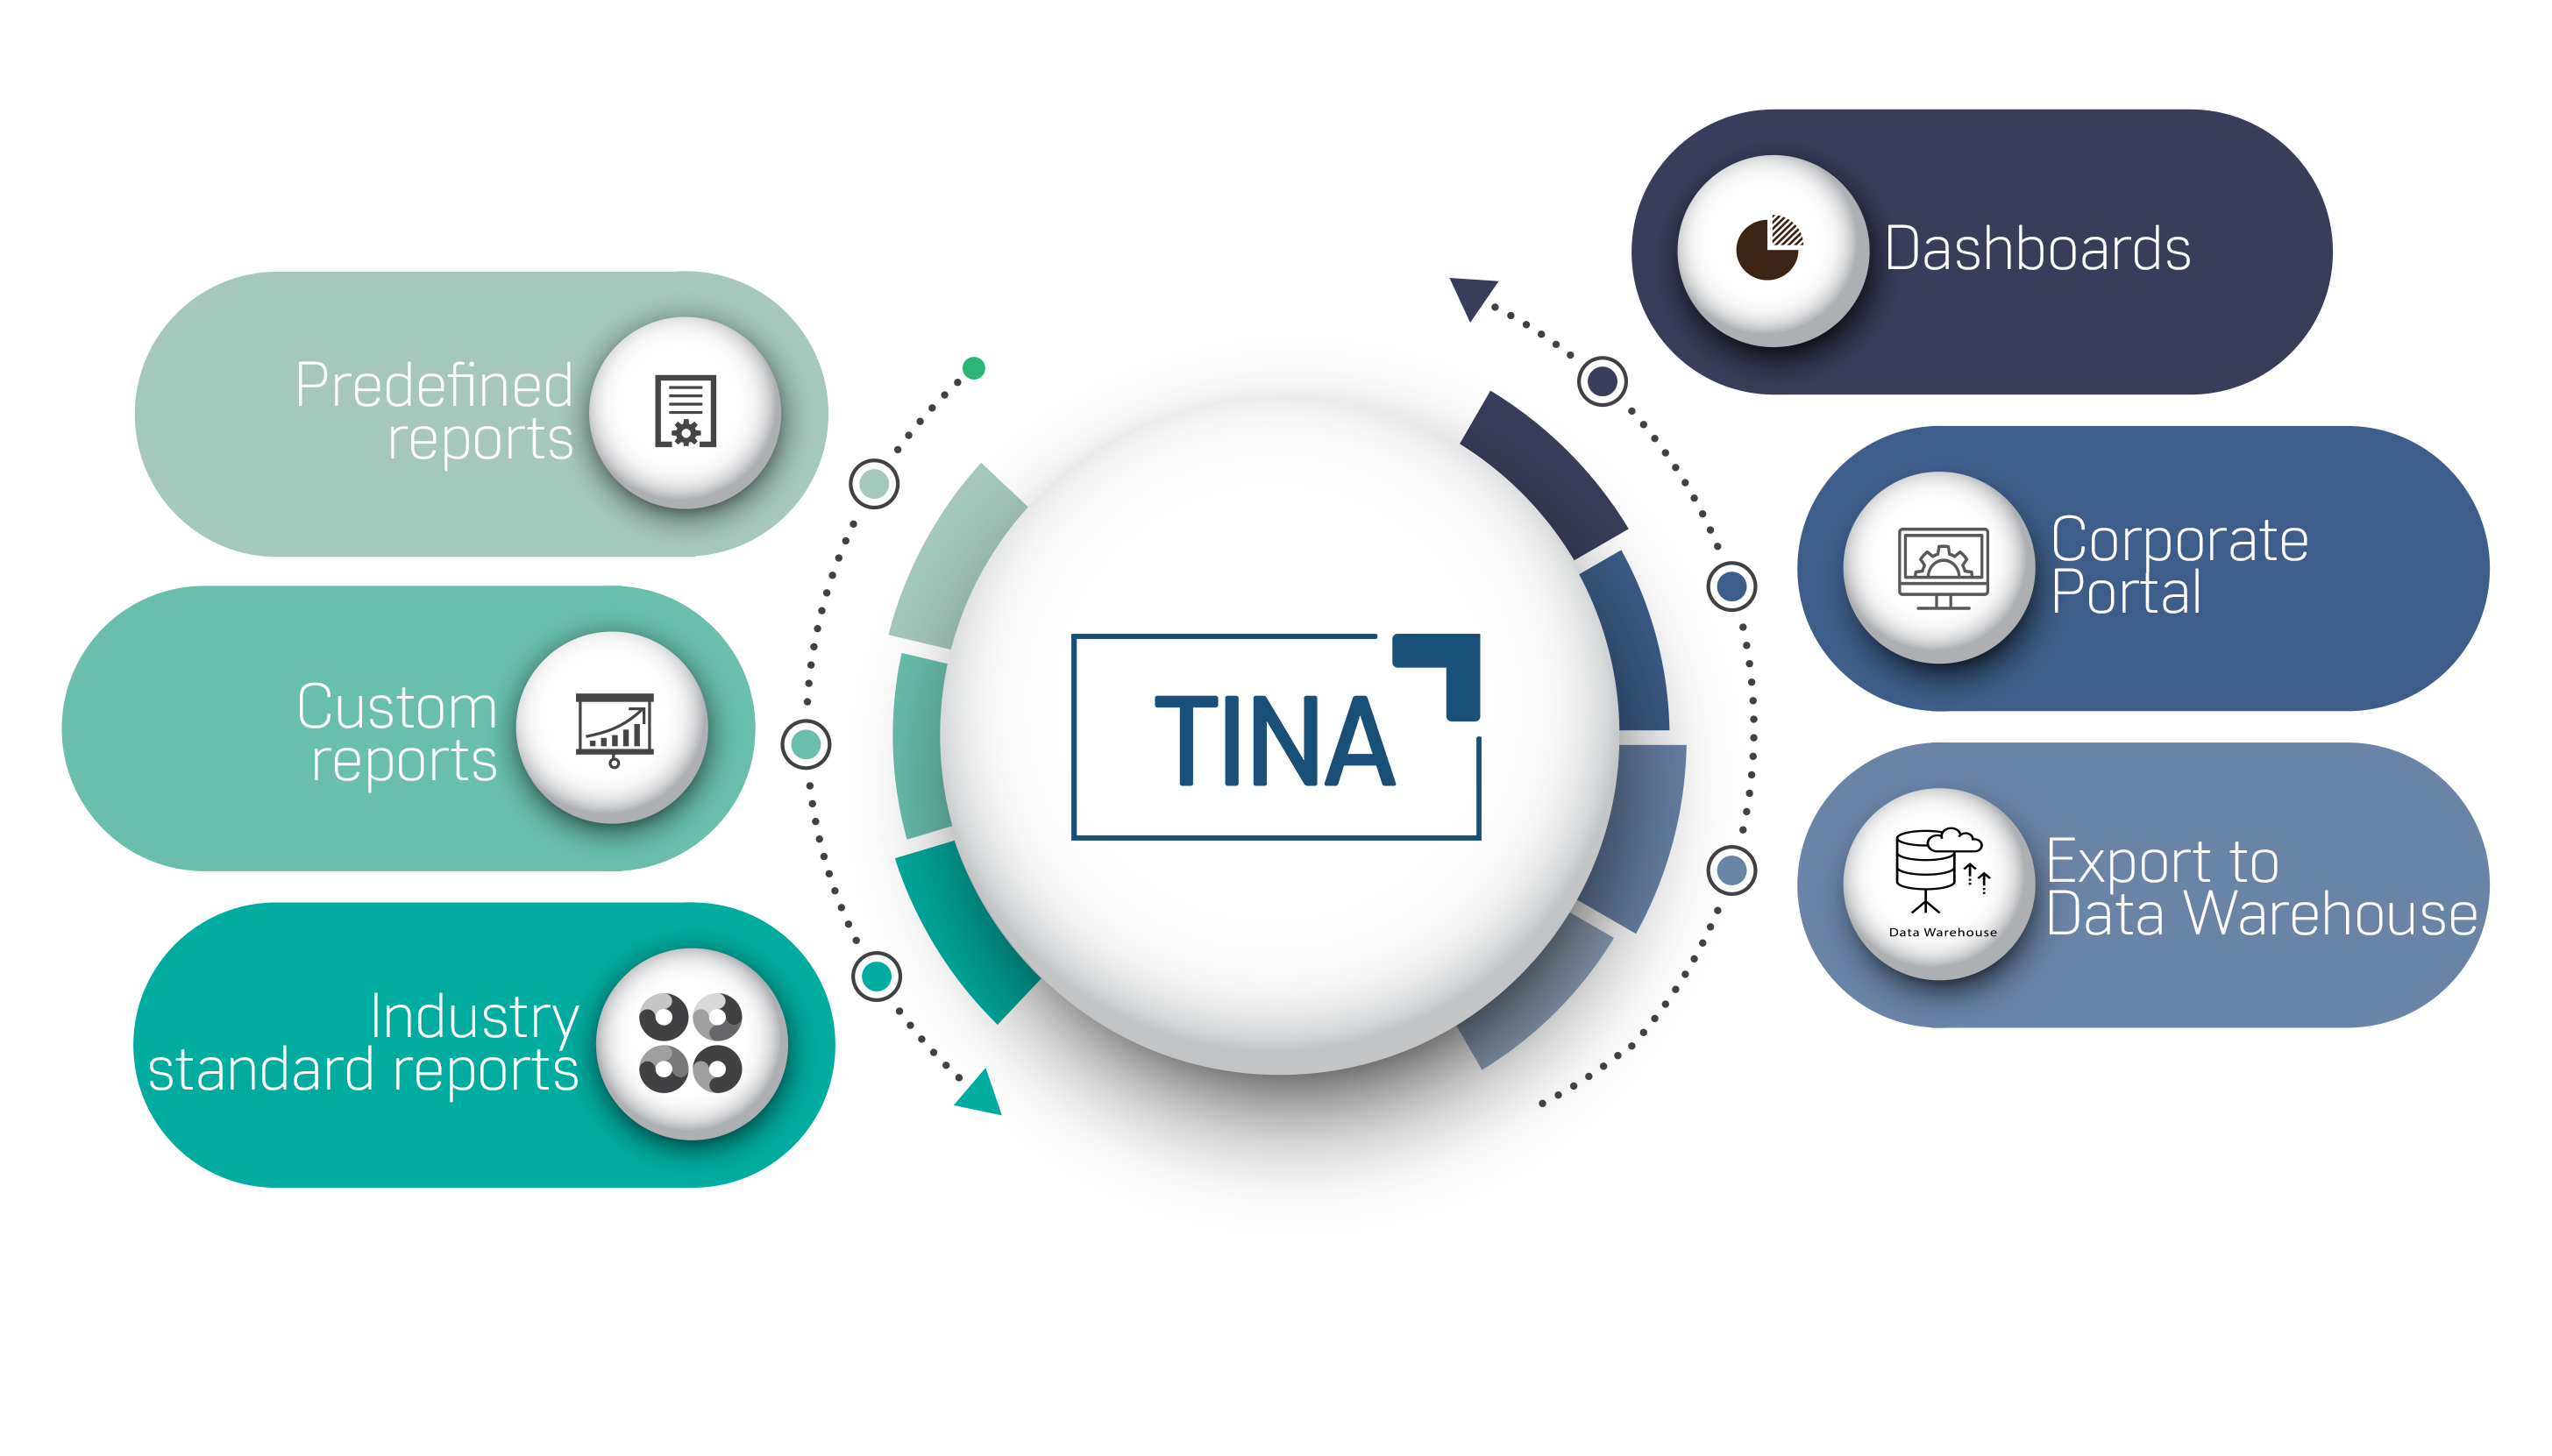 TINA reporting capabilities